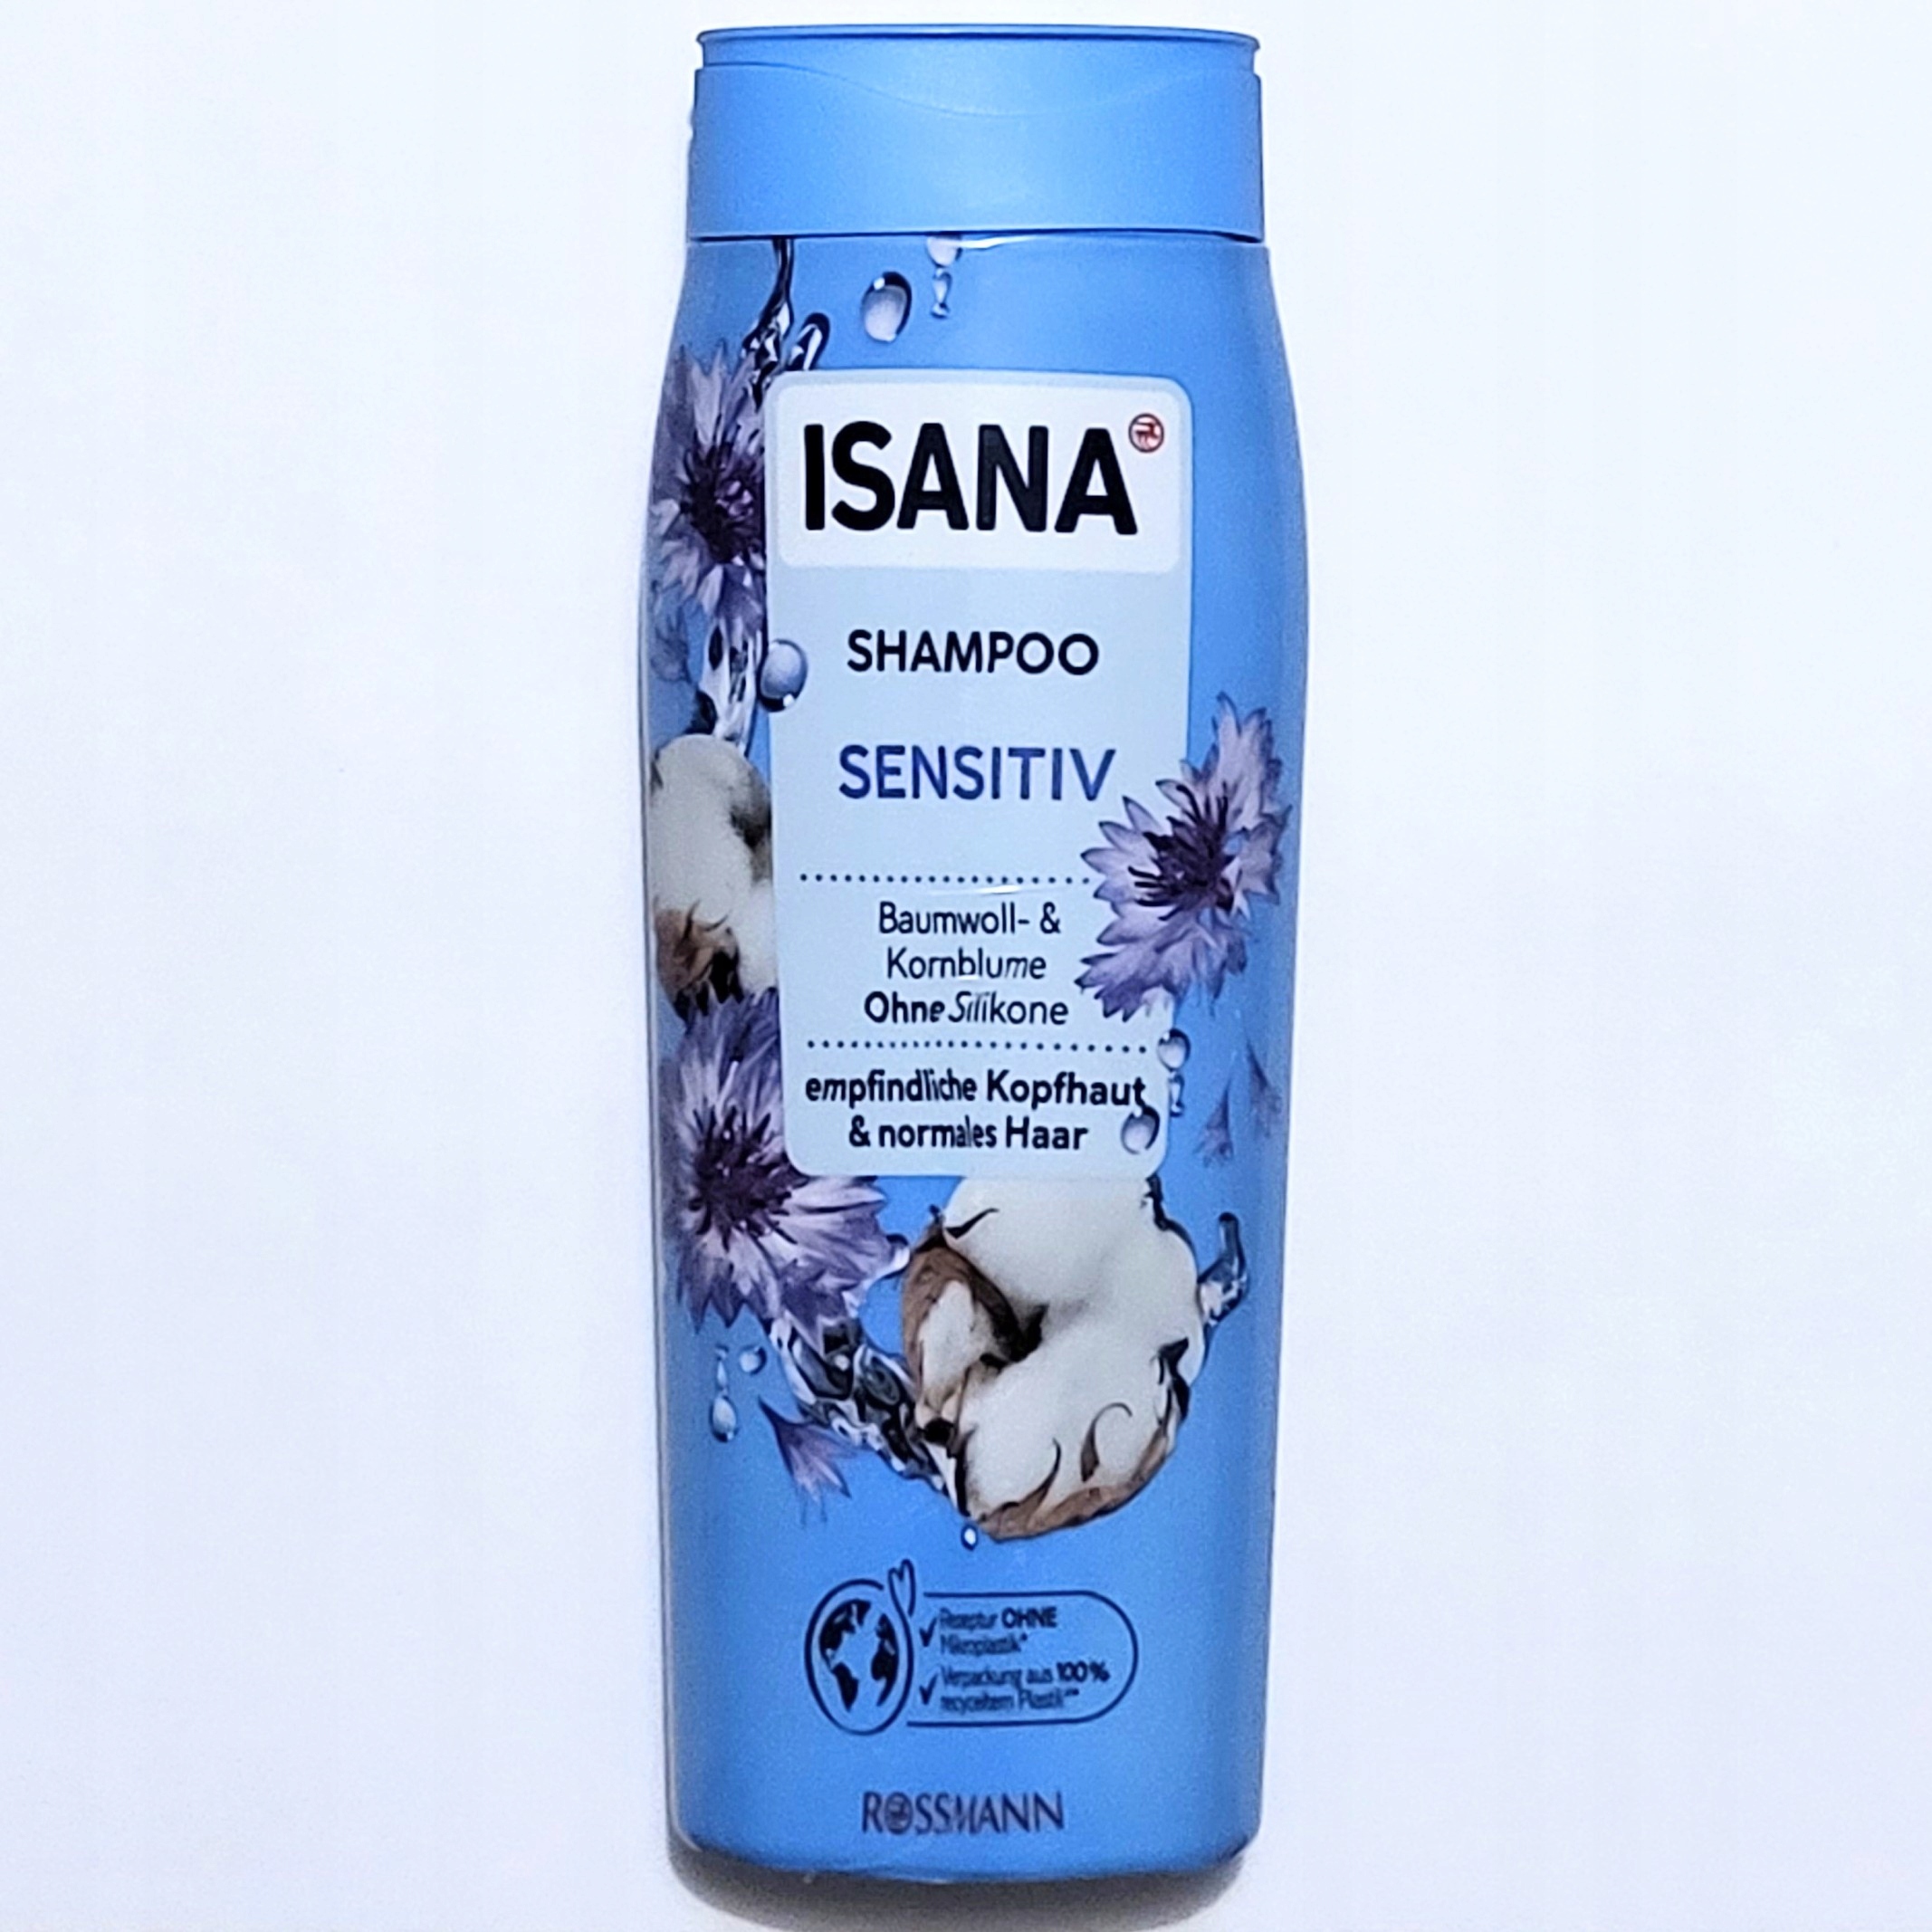 isana sensitive szampon